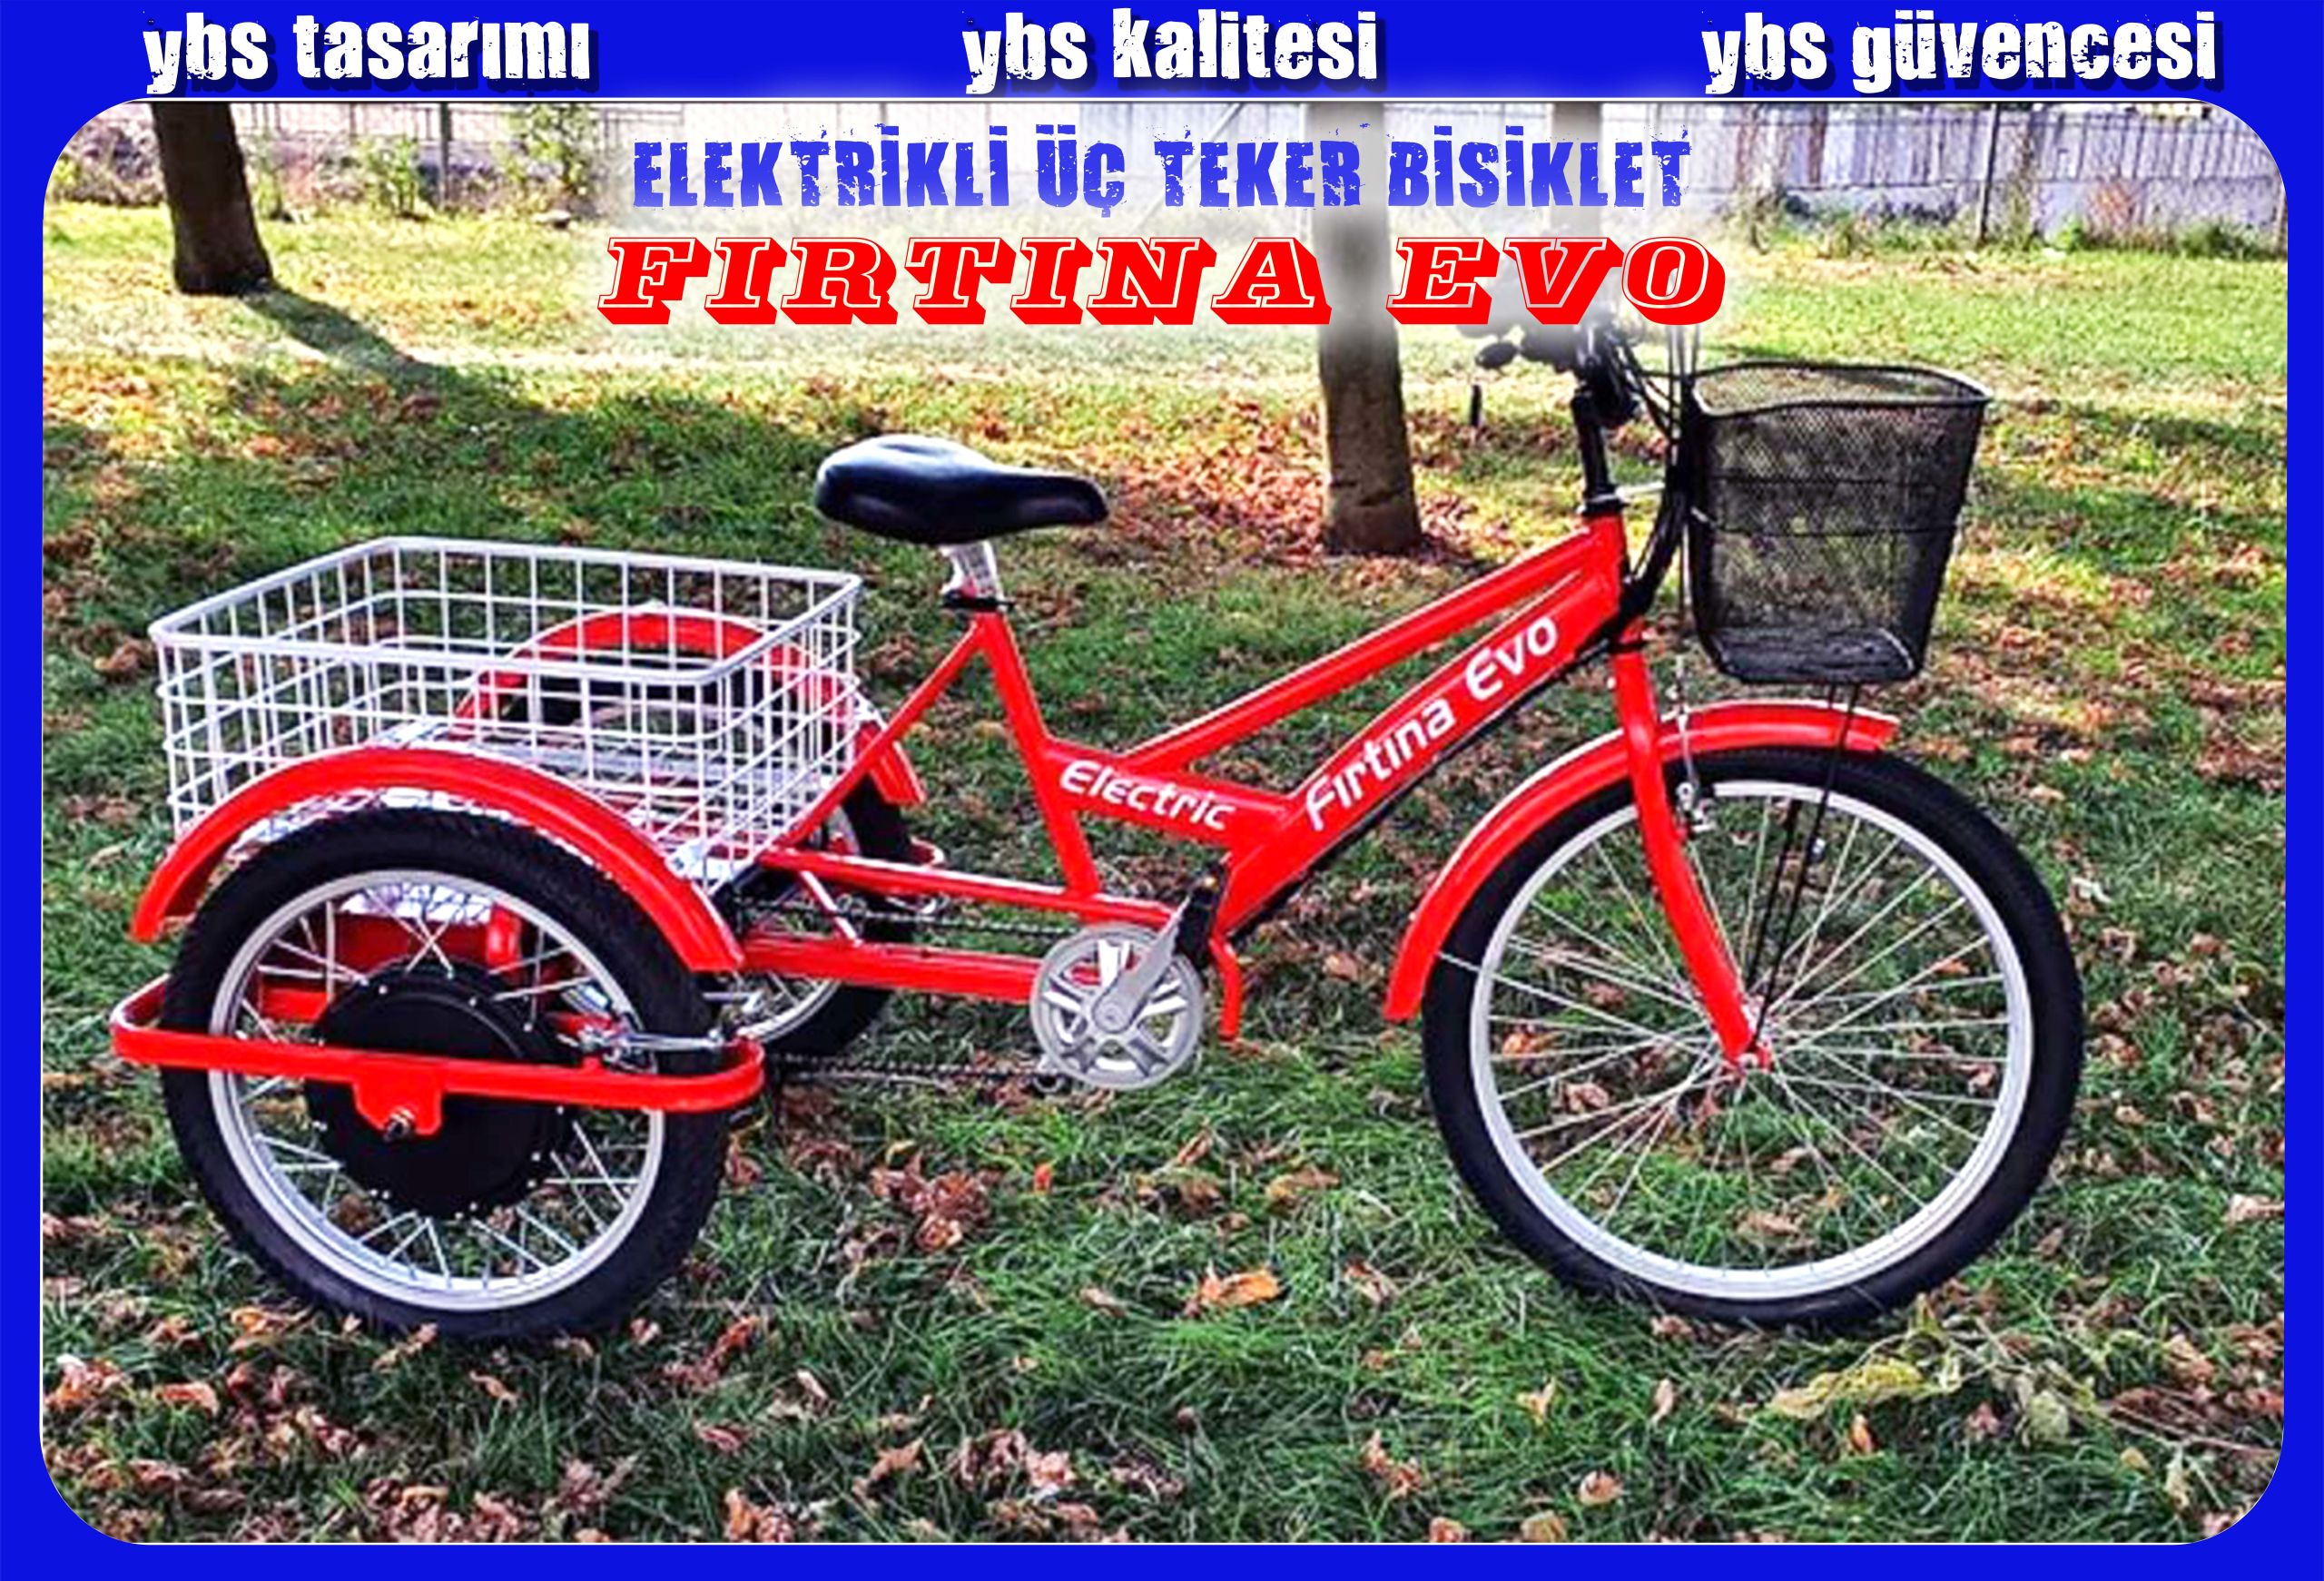 FIRTINA EVO Elektrik Üçteker Bisiklet